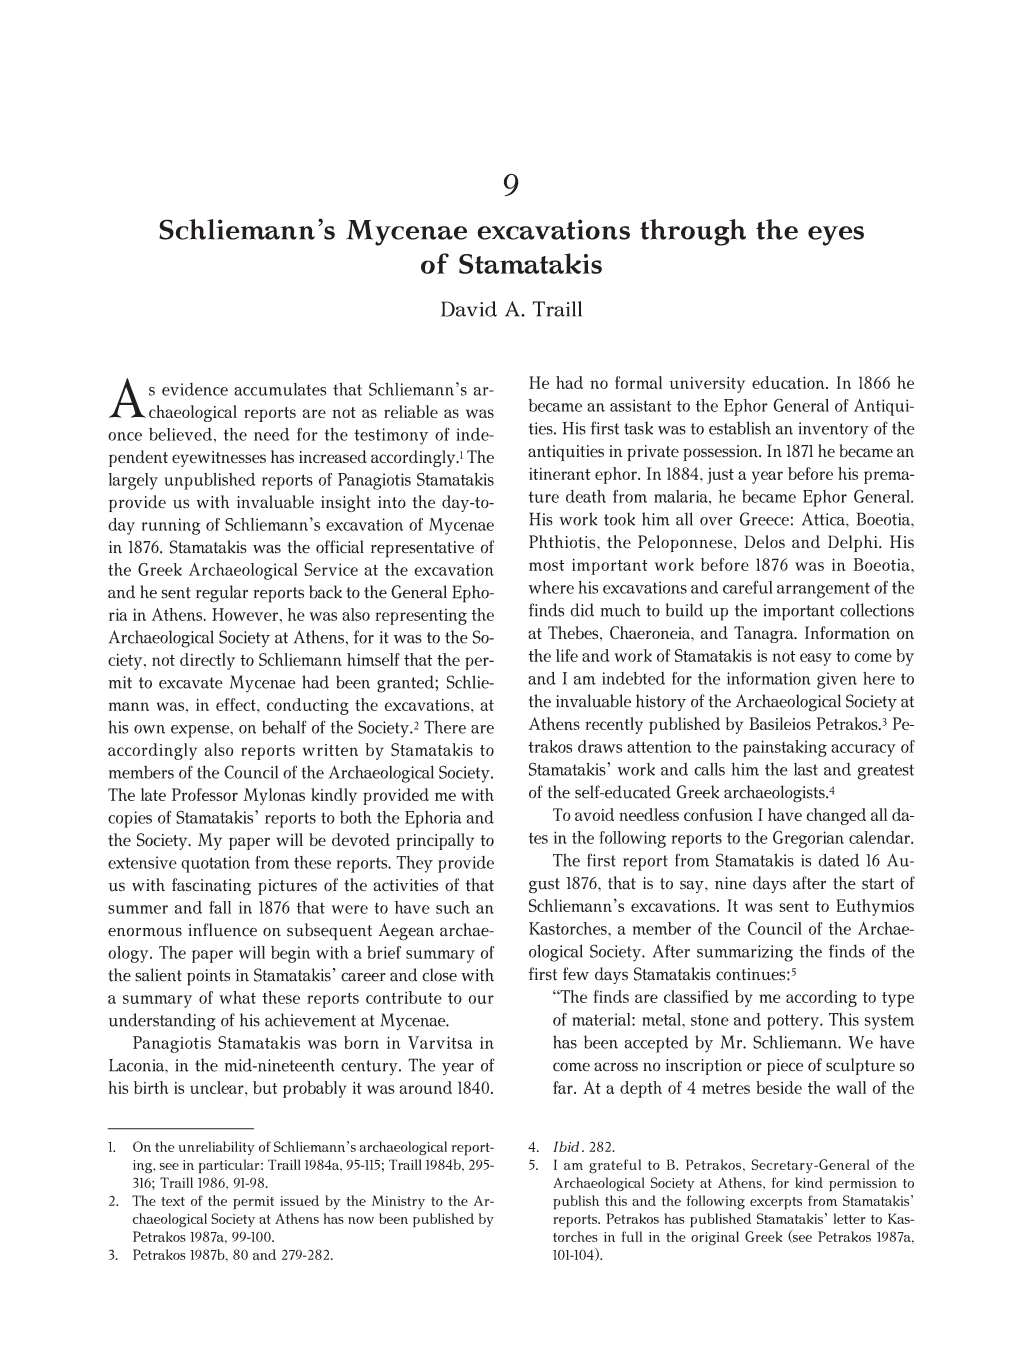 Schliemann's Mycenae Excavations Through the Eyes of Stamatakis